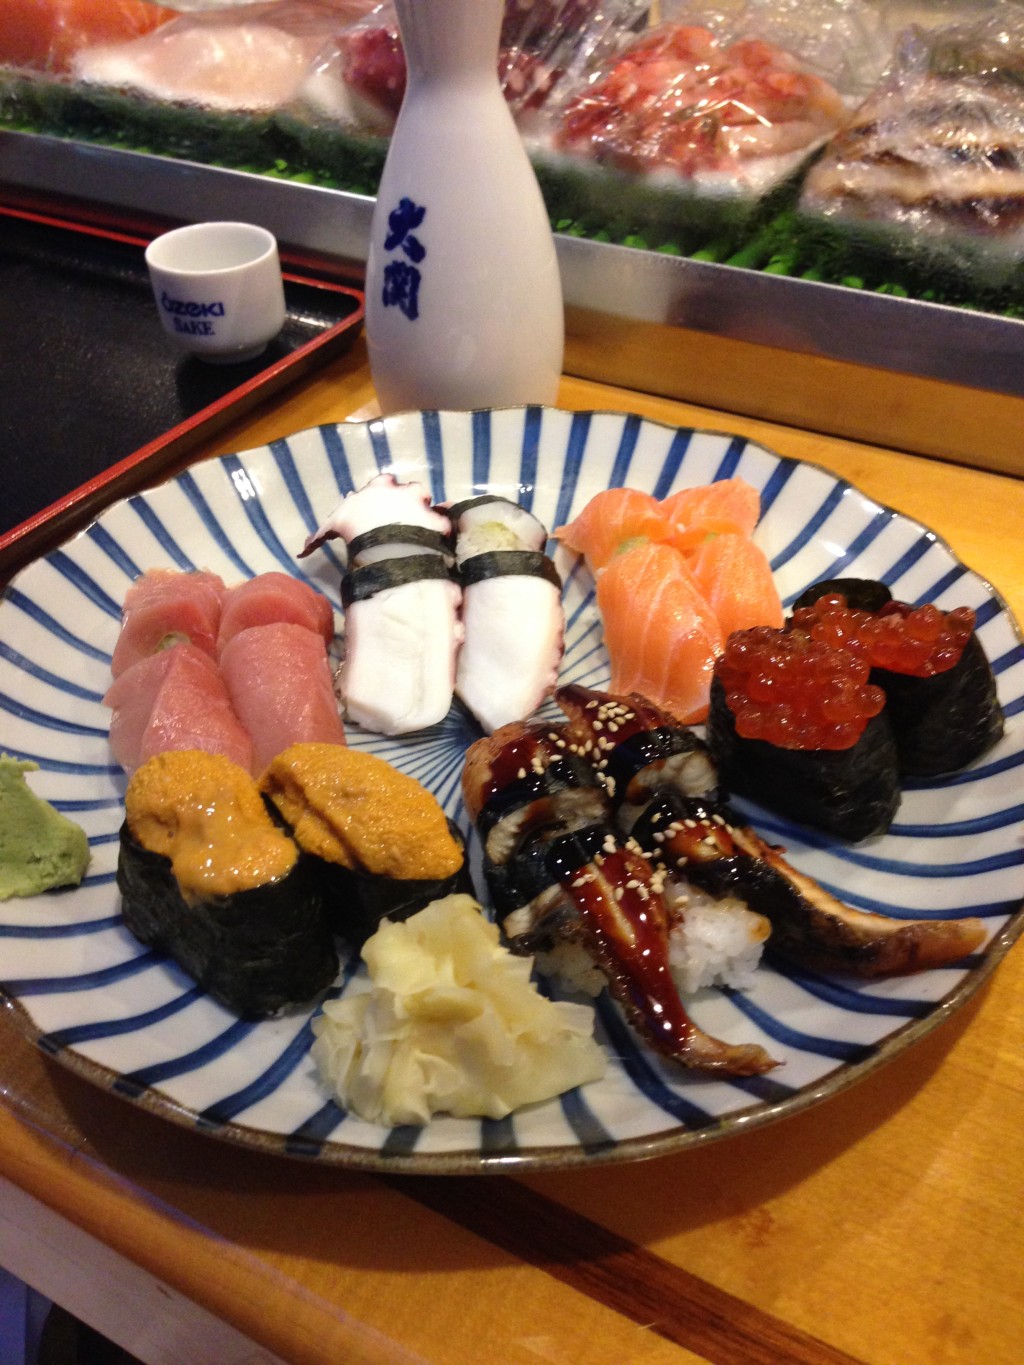 Nigiri sushi at Horinoya include everything from fatty tuna belly to sea urchin and salmon roe.